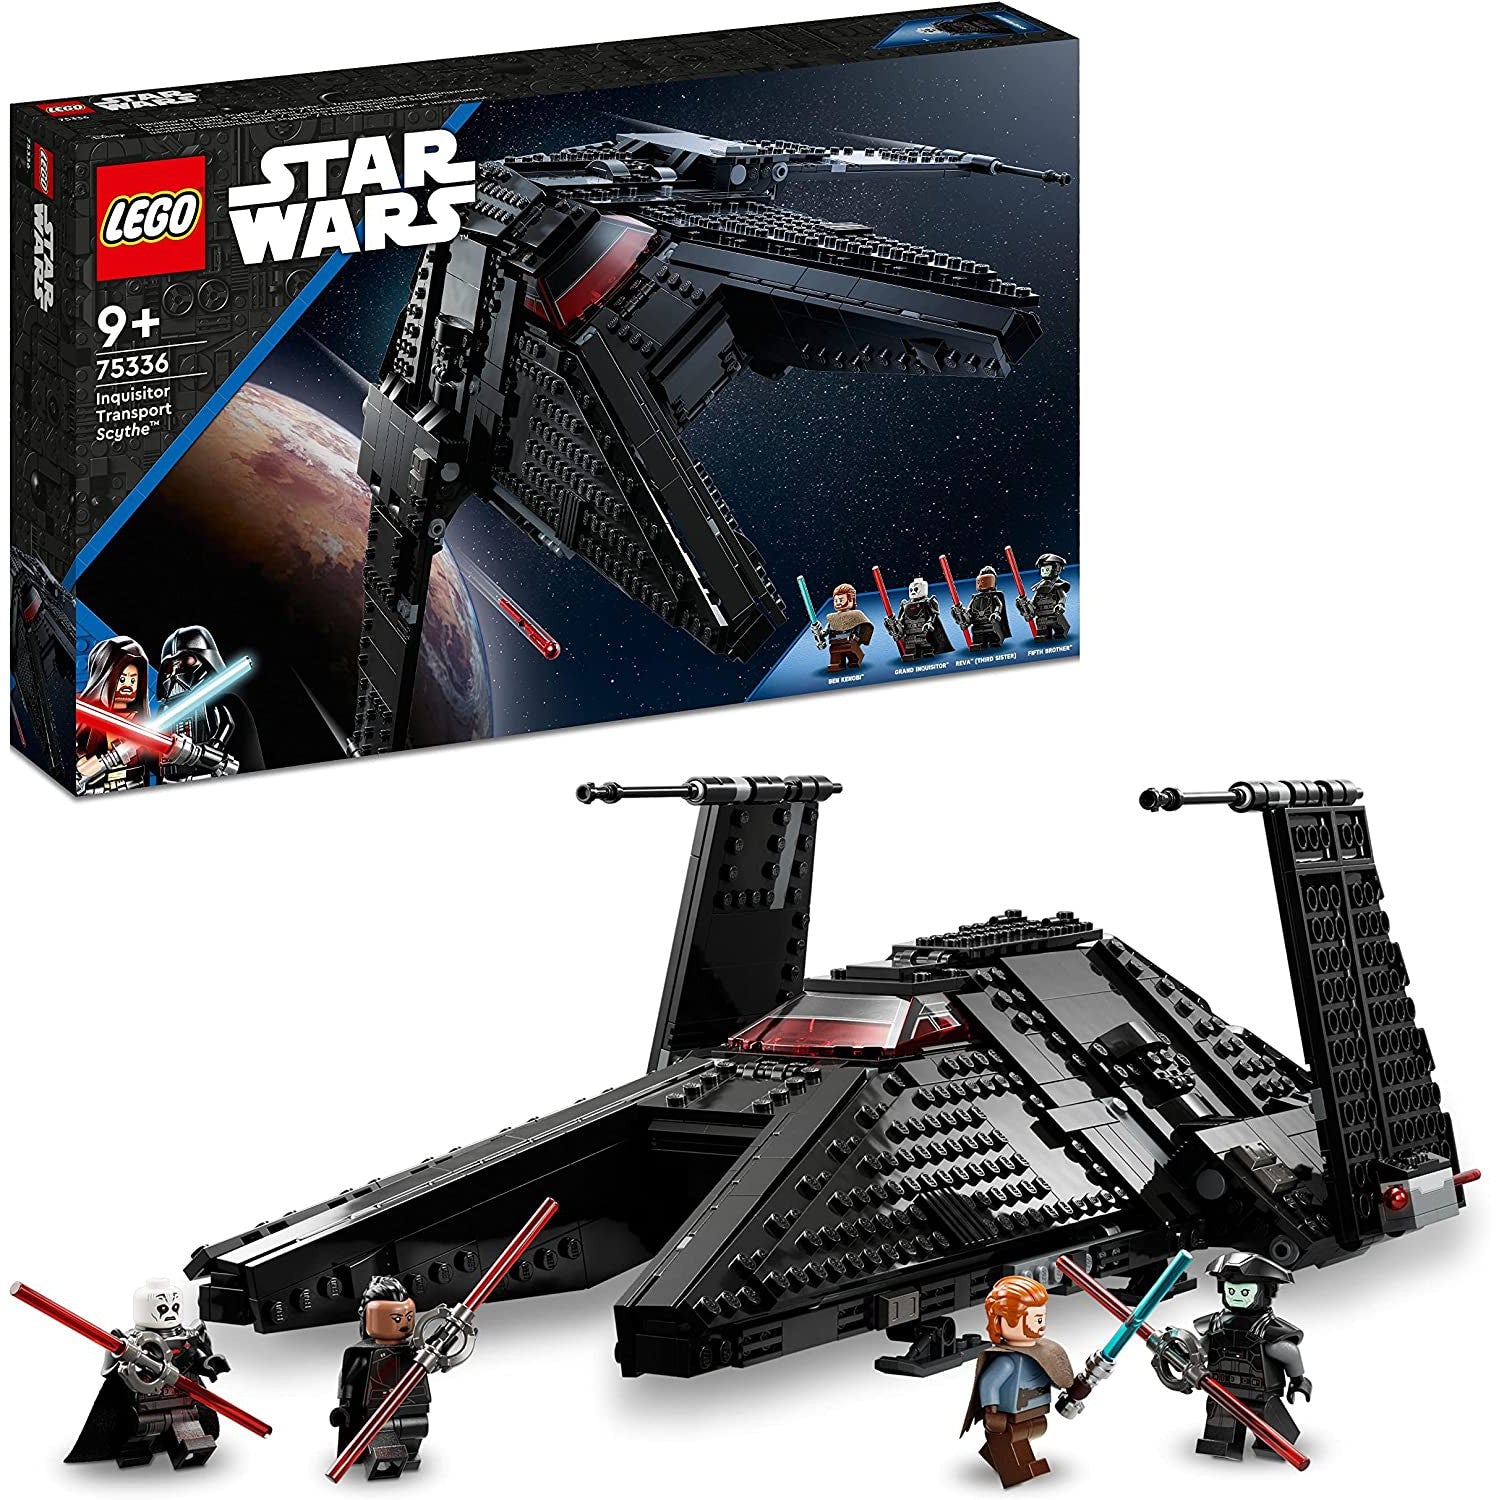 LEGO 75336 Star Wars Inquisitor Transport Scythe Toy Set - New